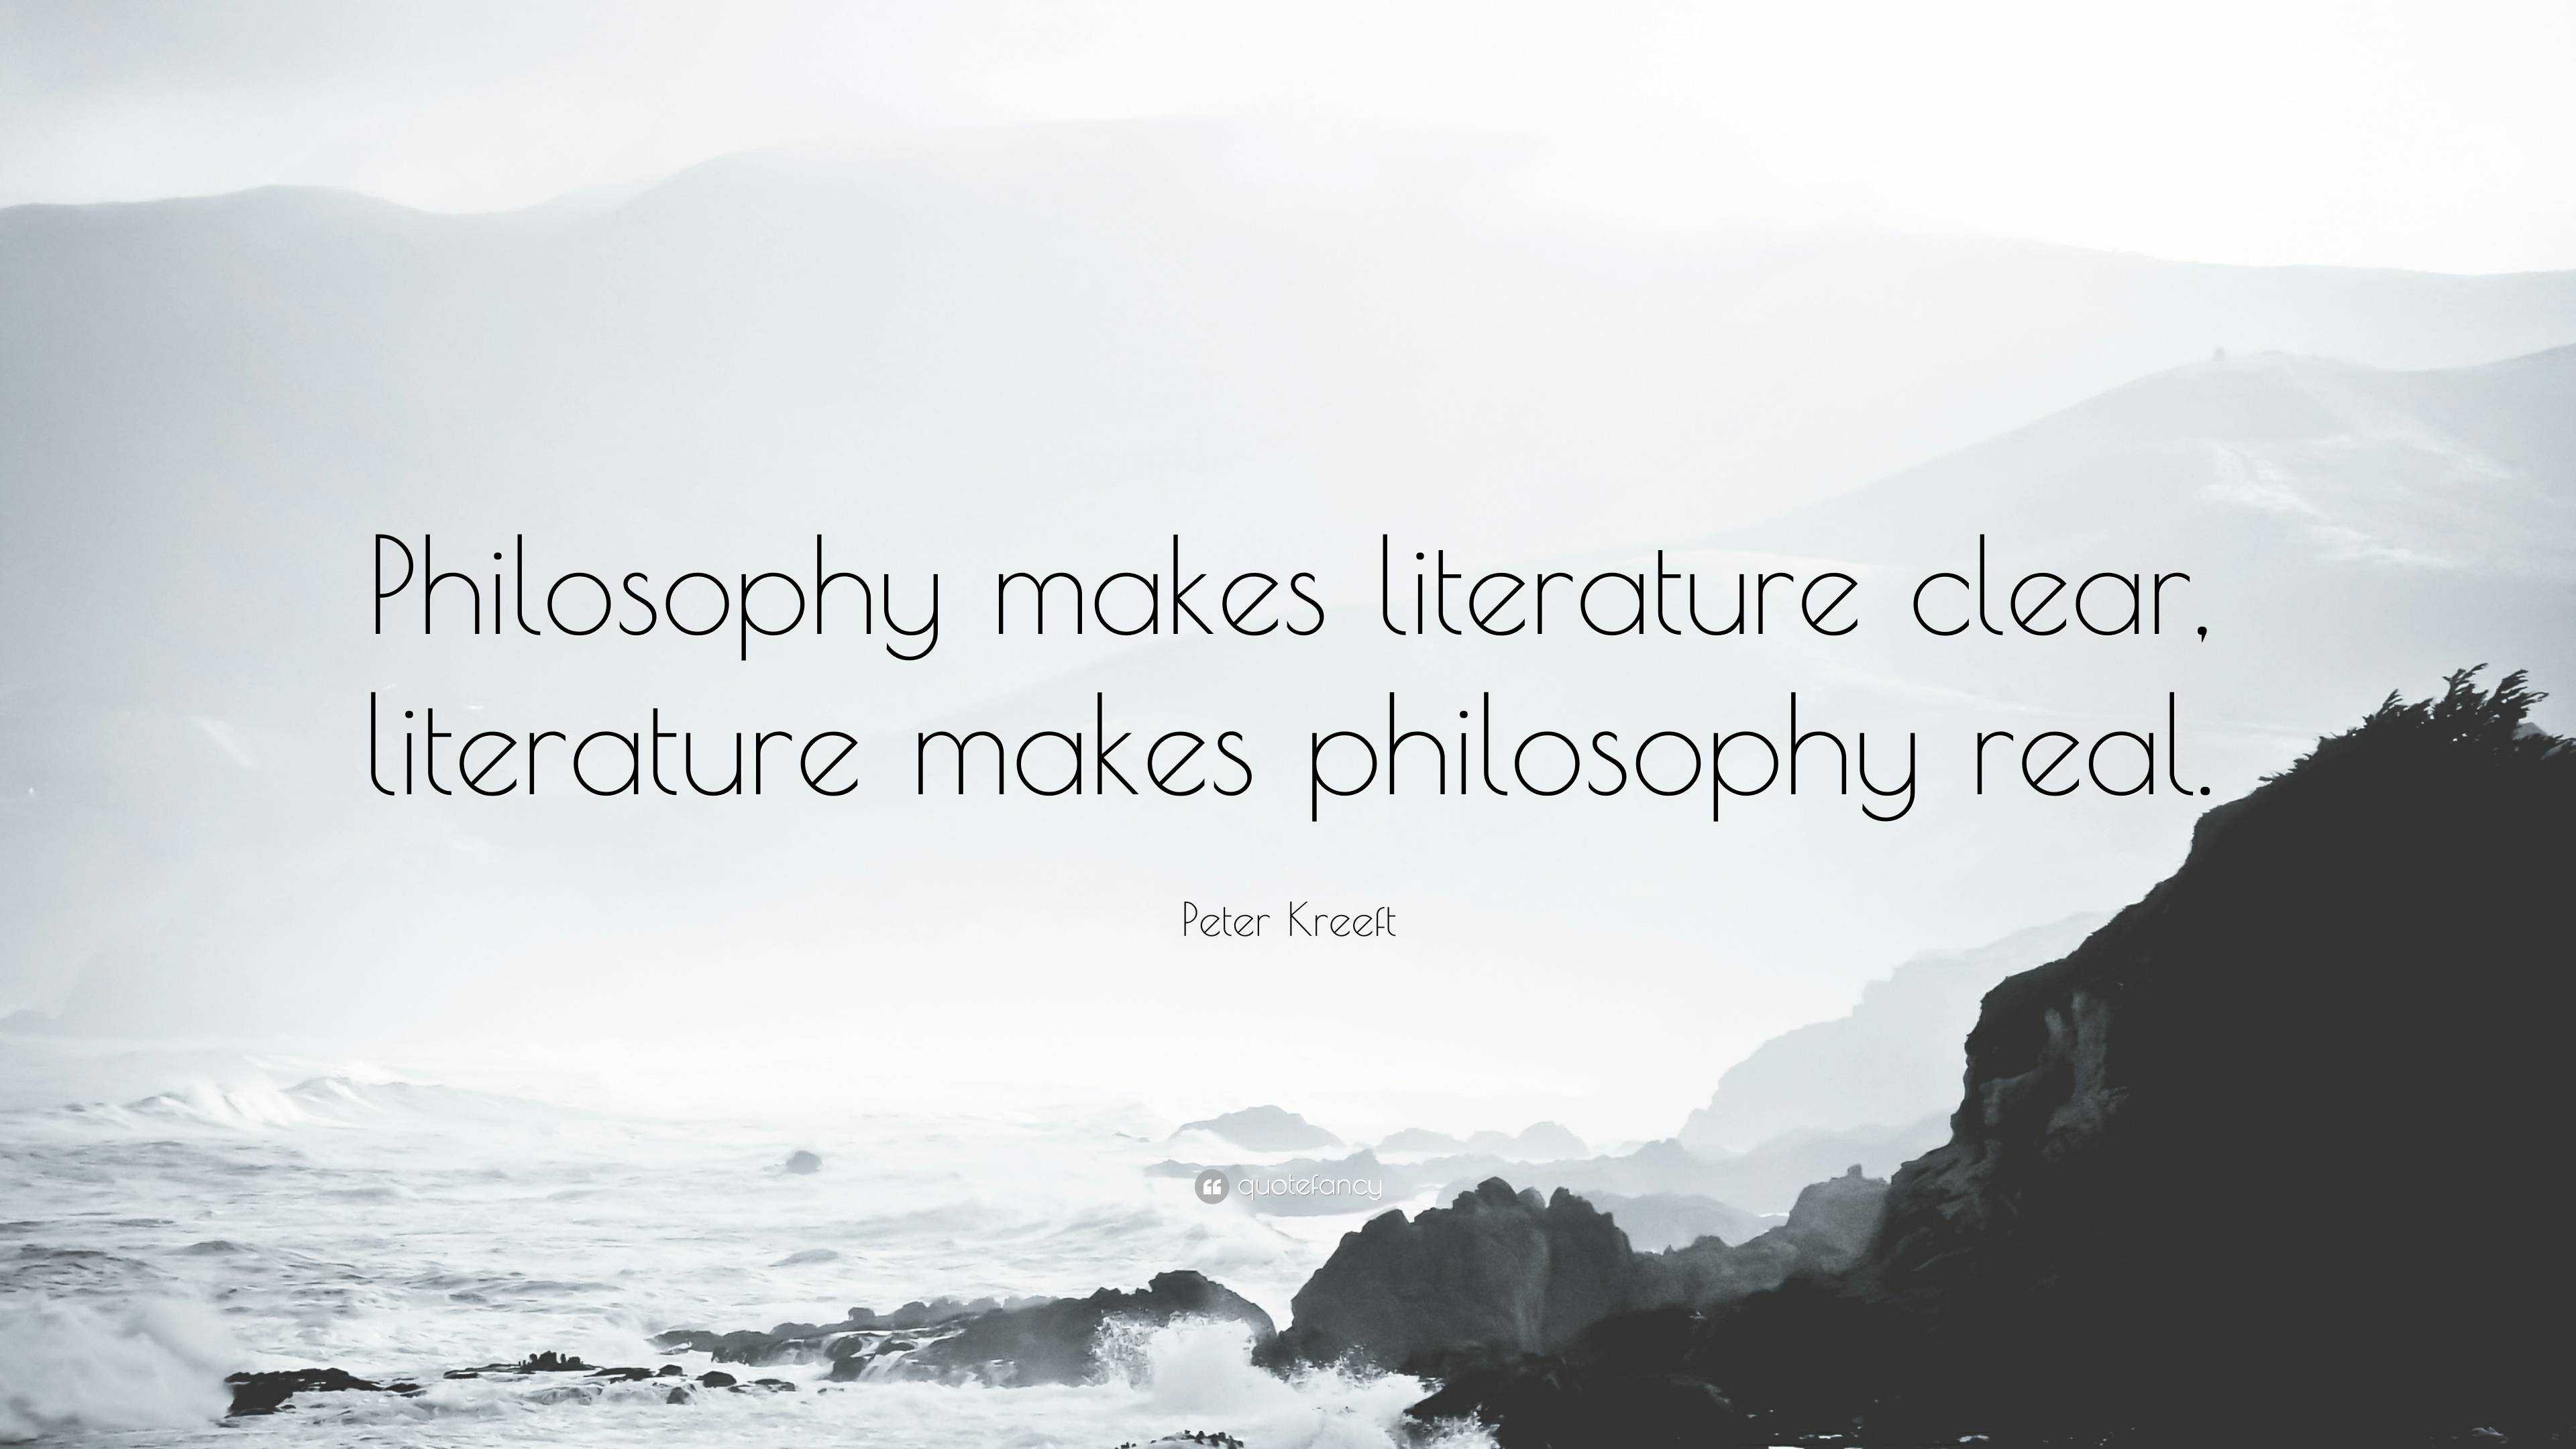 Peter Kreeft Quote: “Philosophy makes literature clear, literature ...